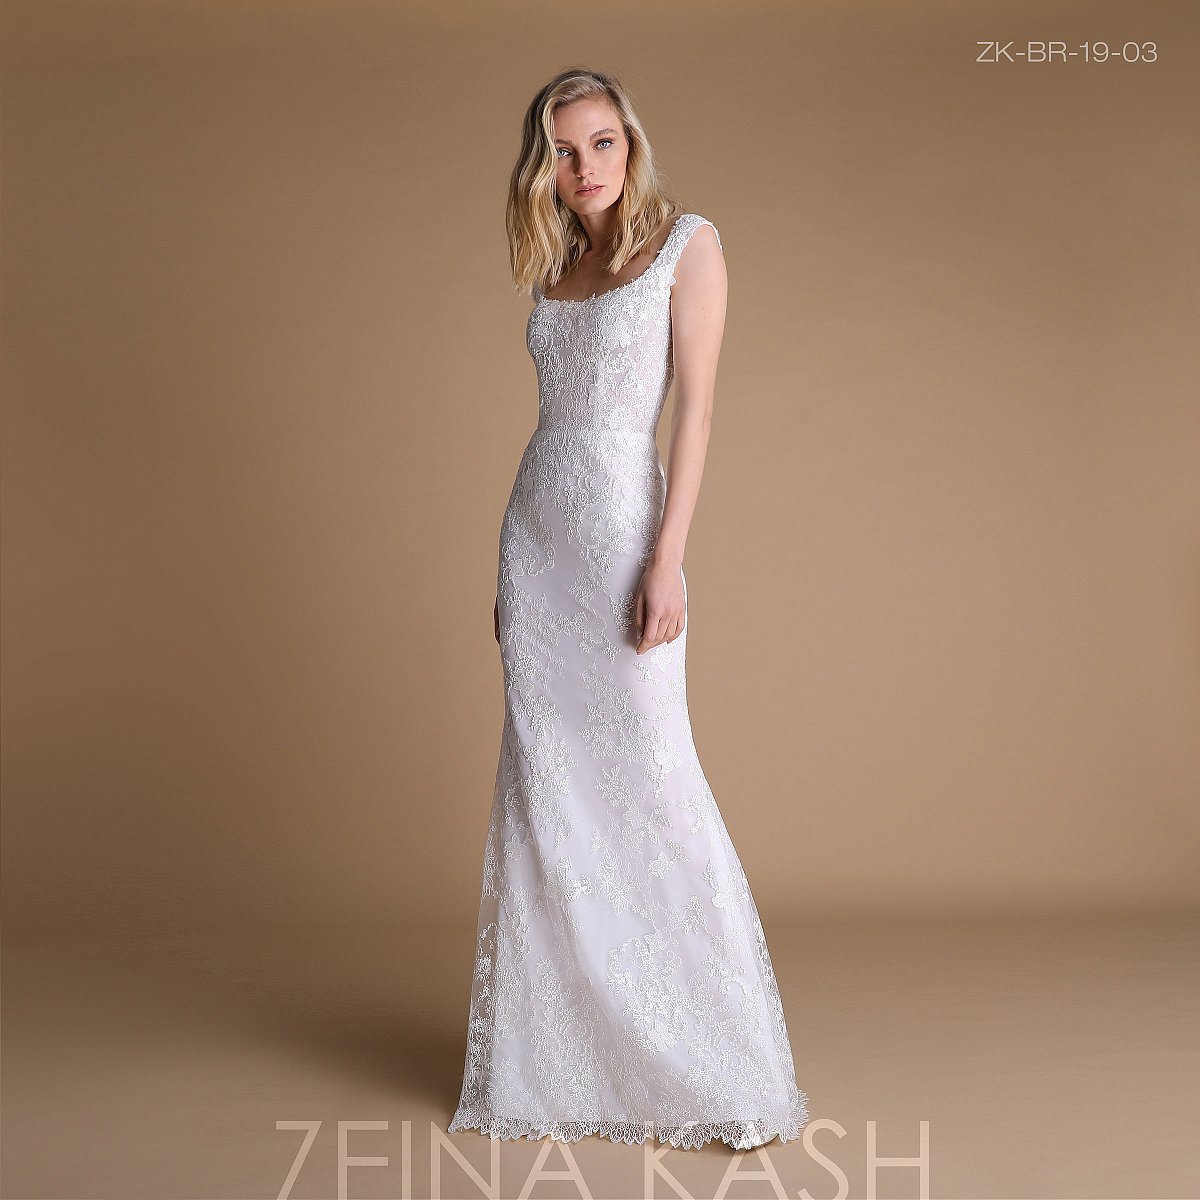 Zeina Kash Kollektion 2019 - Brautmode - 1